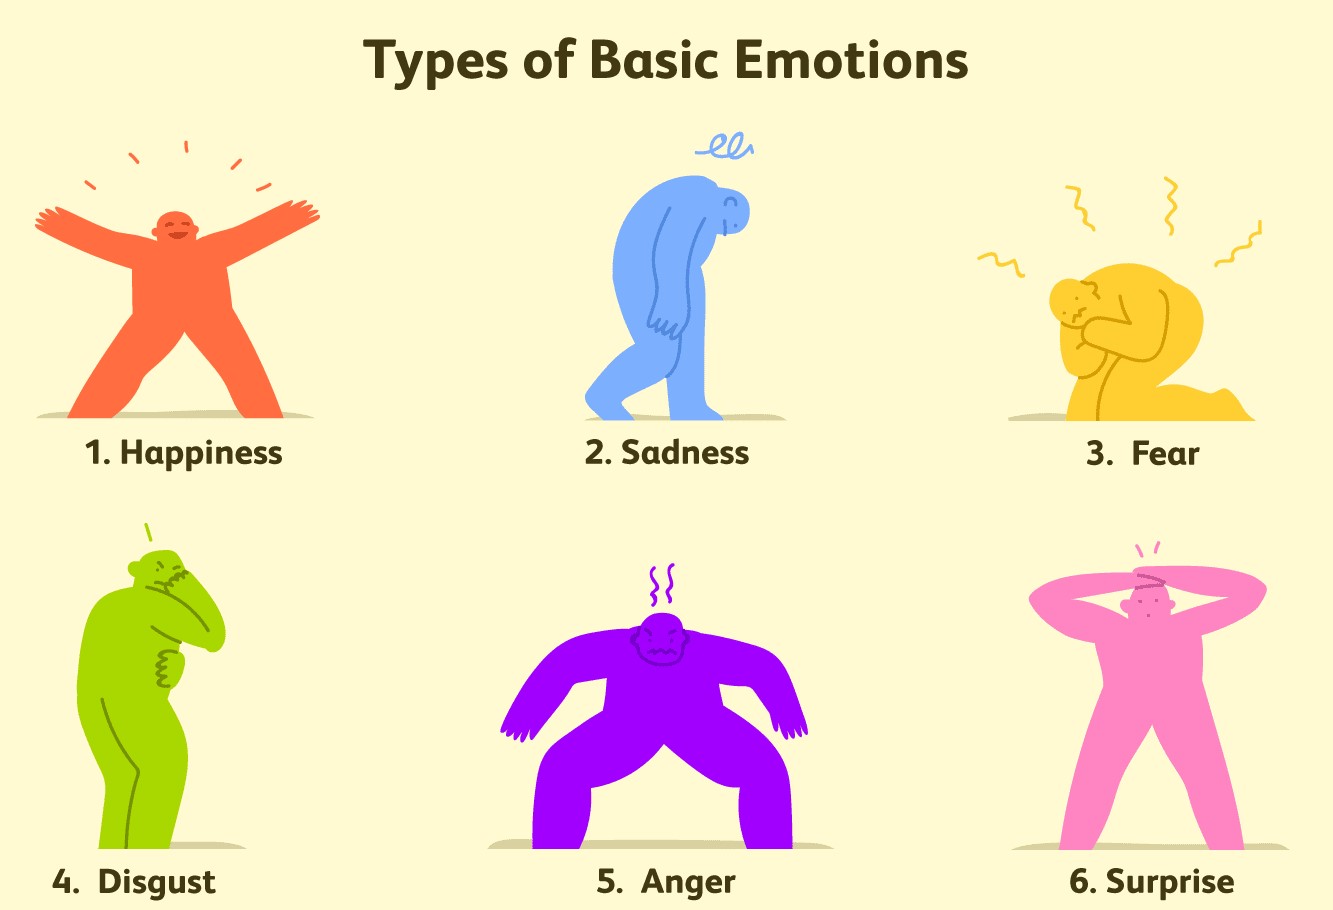 list of emotions